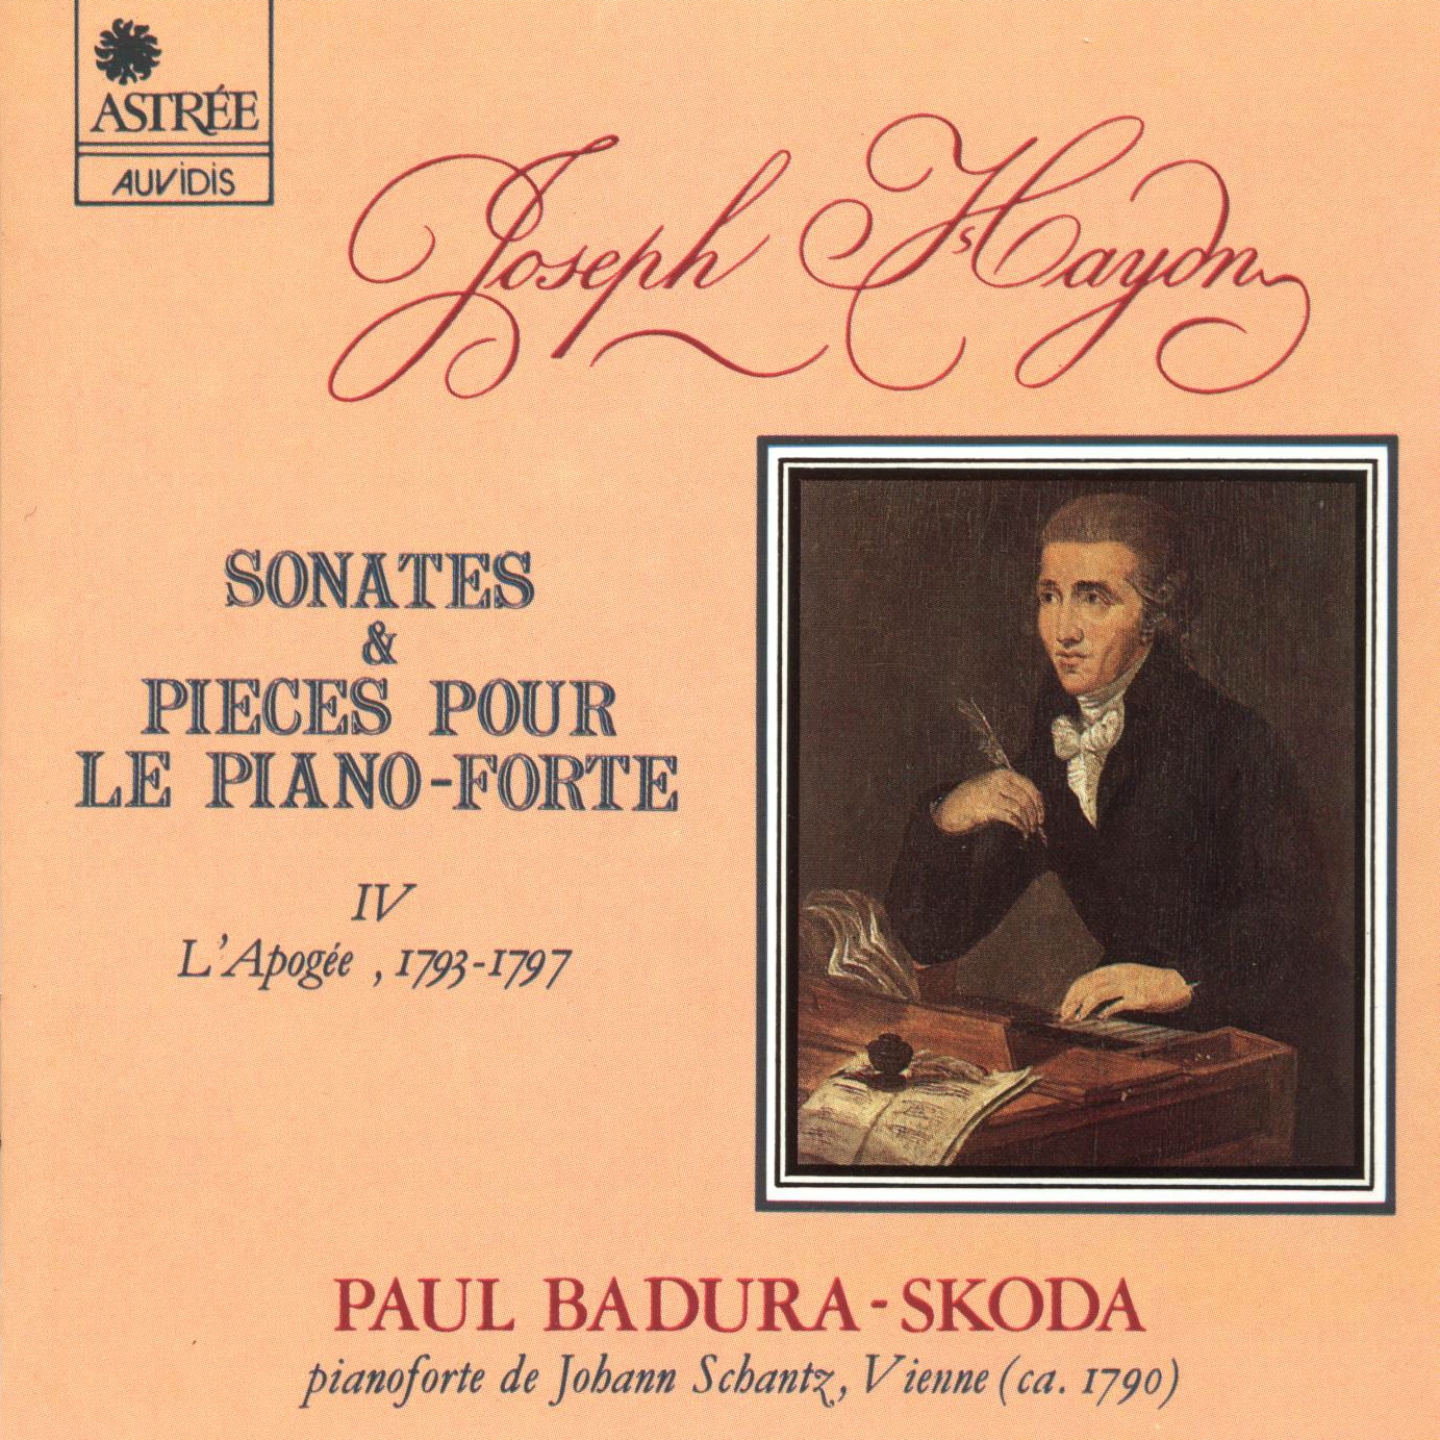 Haydn: Sonates  pie ce pour le pianoforte, Vol. 4